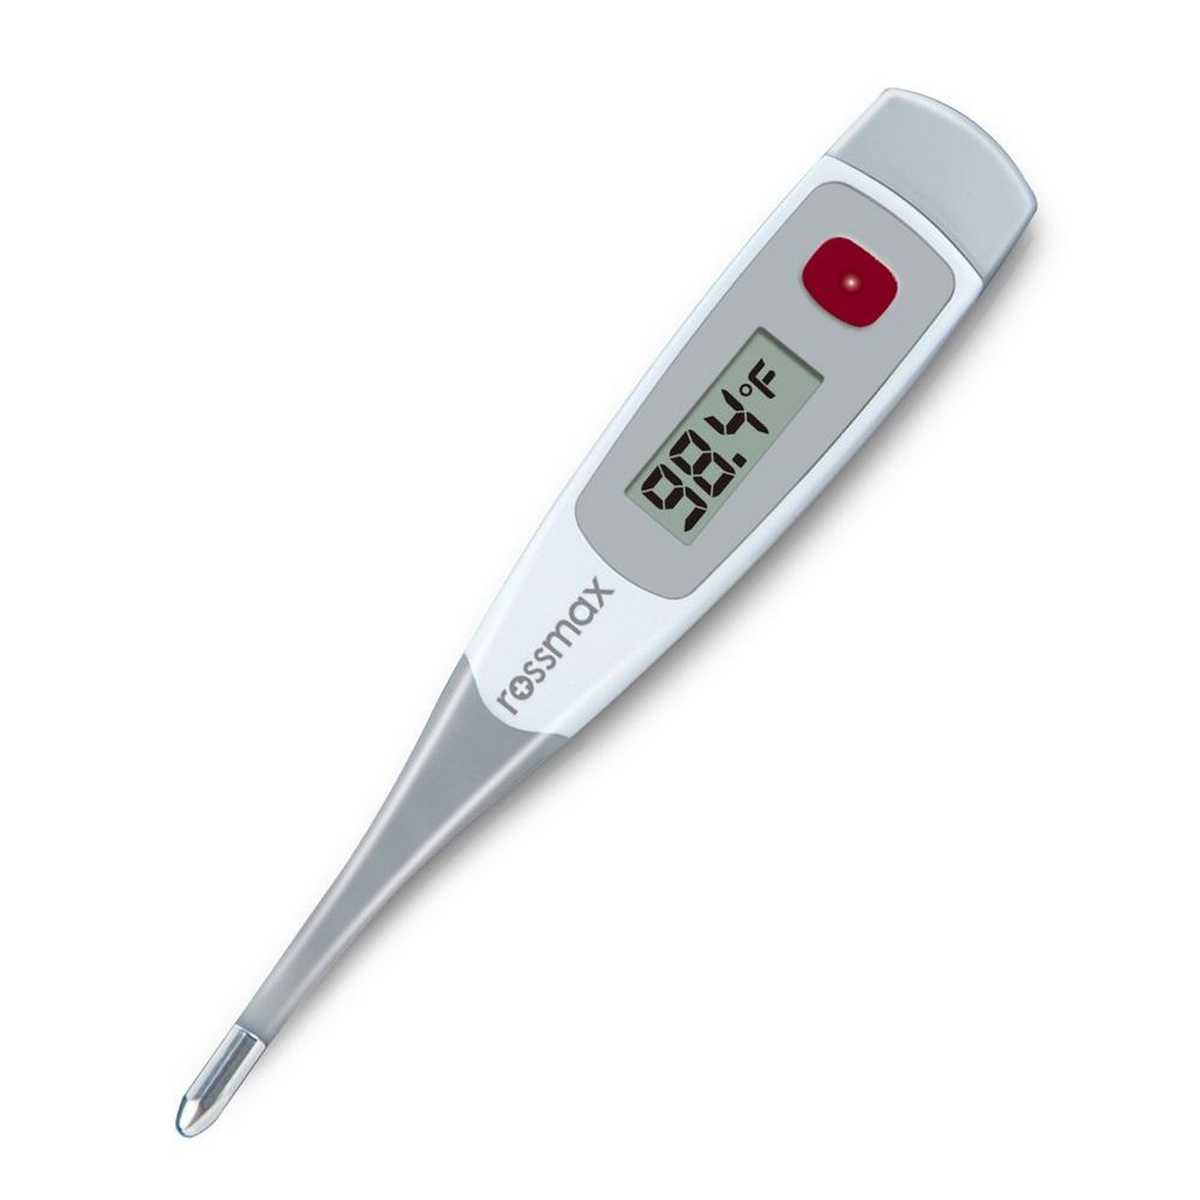 Rossmax Digital Thermometer